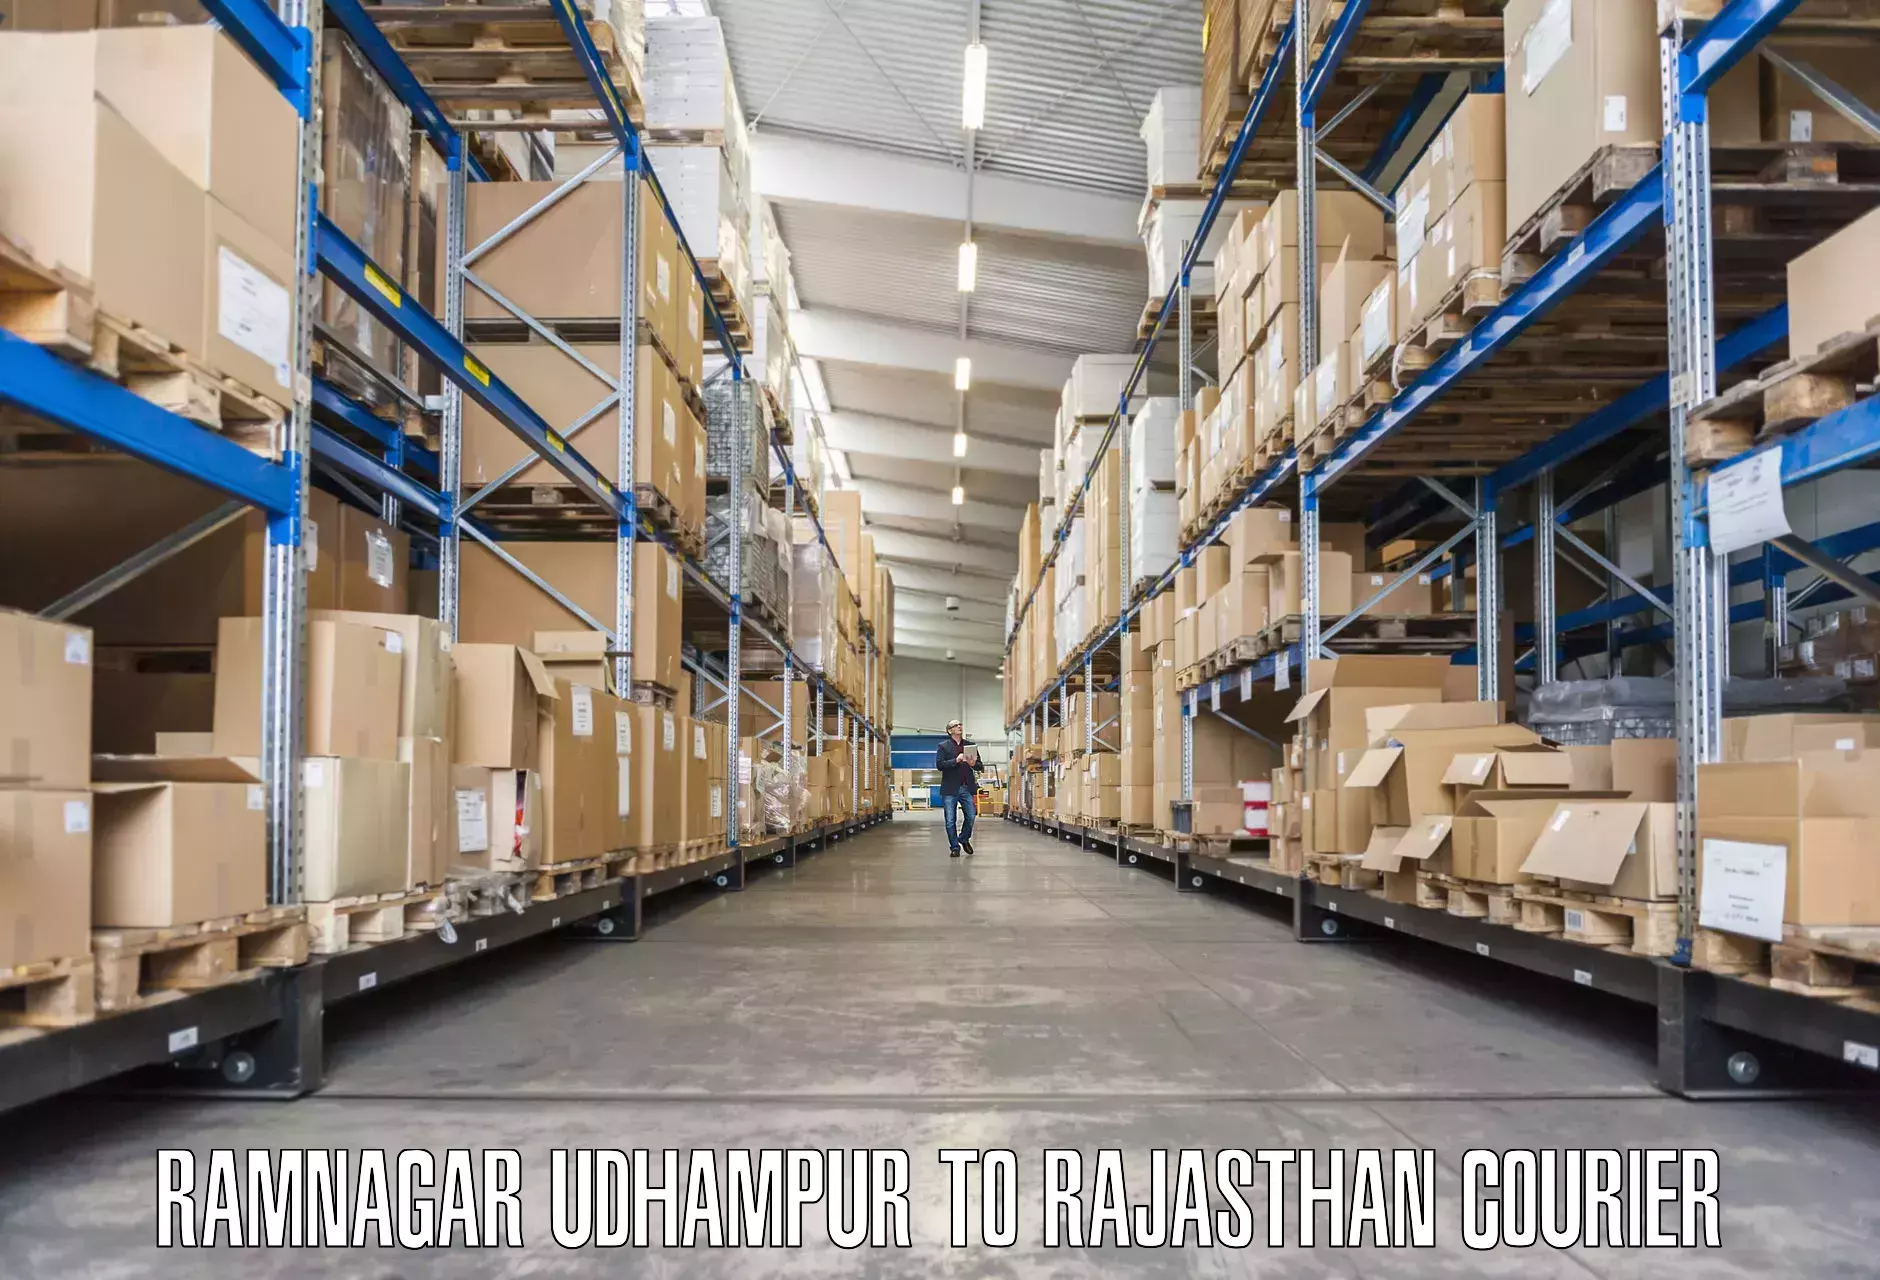 Professional moving assistance Ramnagar Udhampur to Kherwara